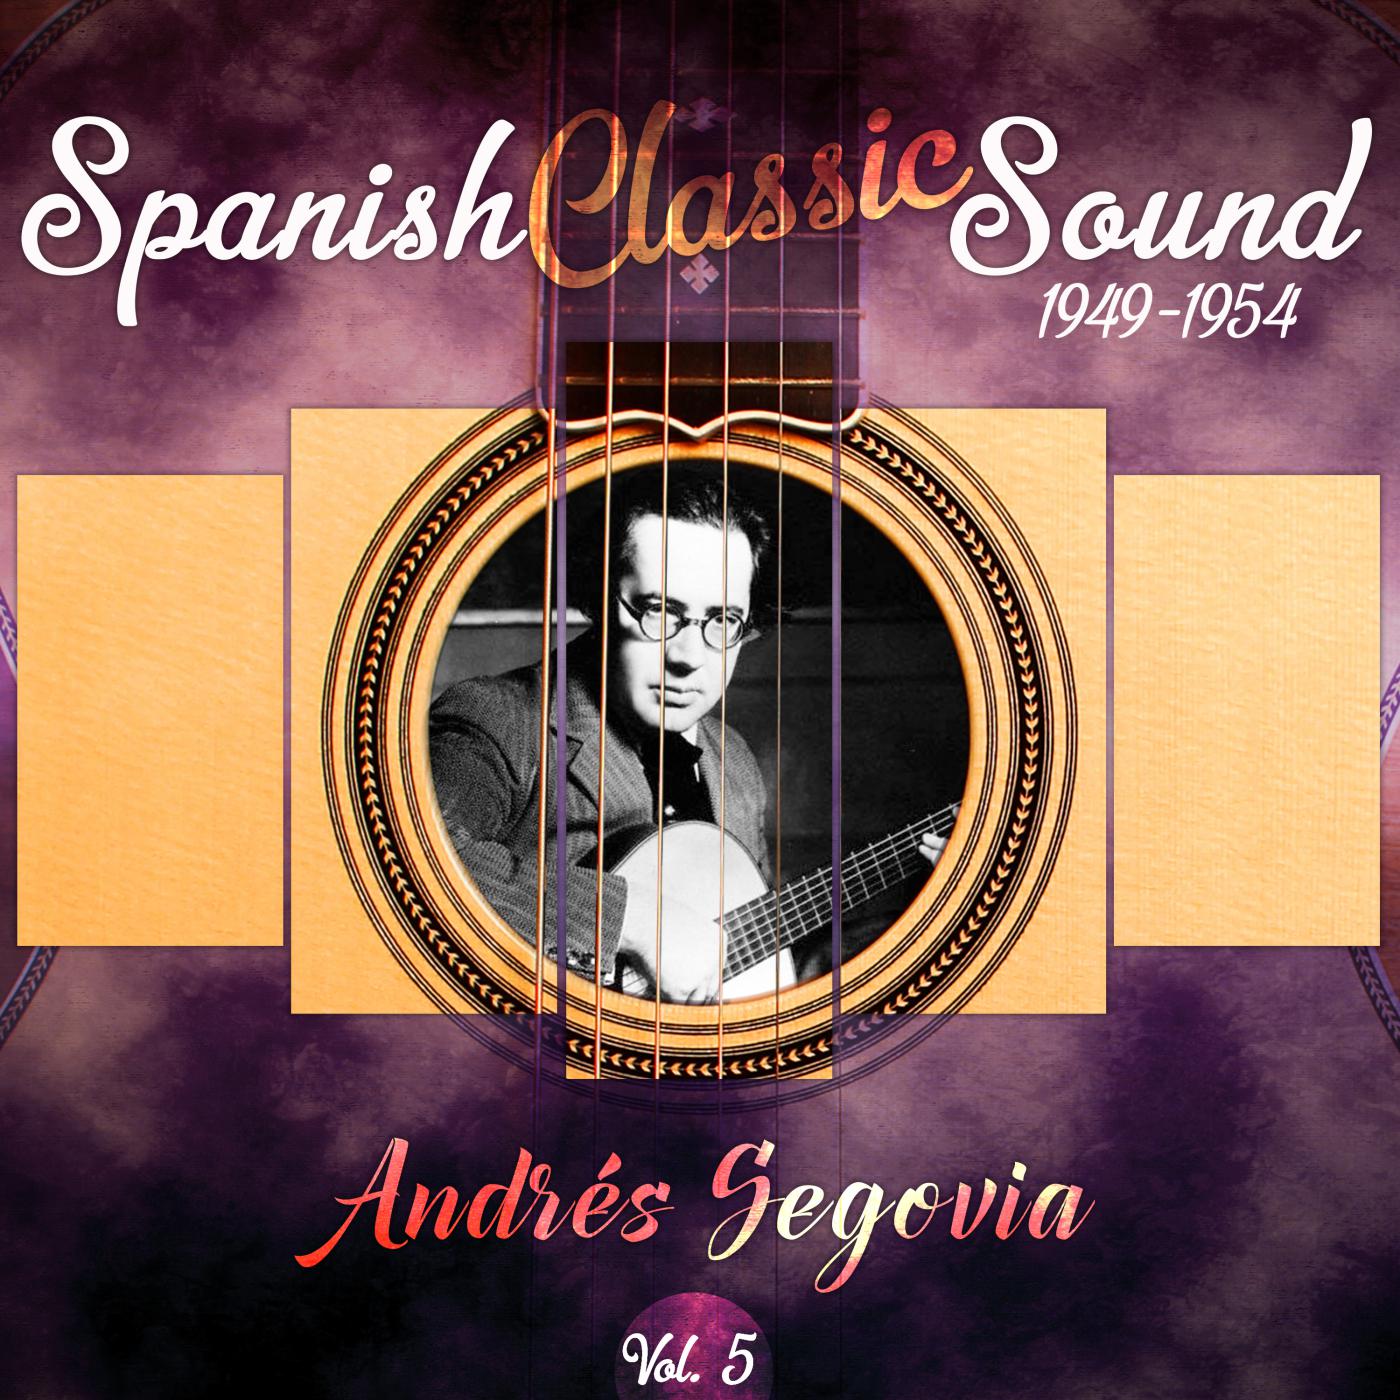 Spanish Classic Sound, Vol. 5 (1949  - 1954)